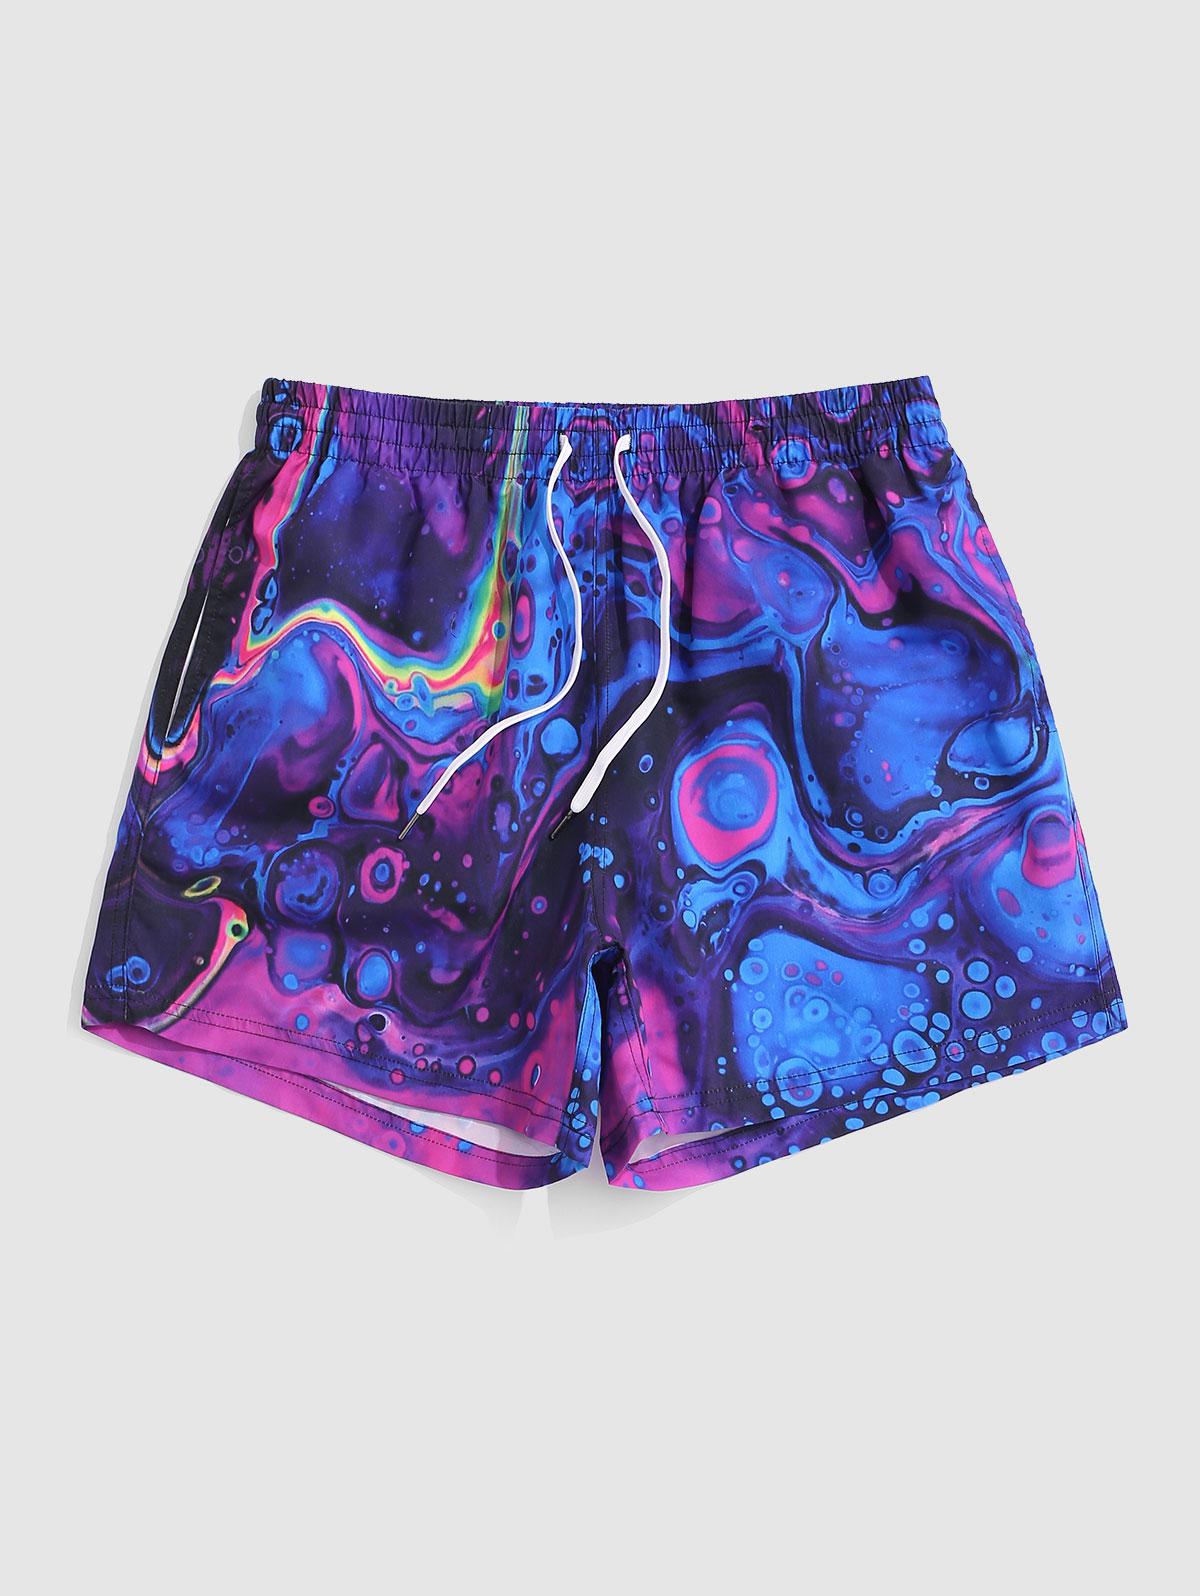 ZAFUL Men's Drawstring Iridescence Print Vacation Shorts 2xl Purple